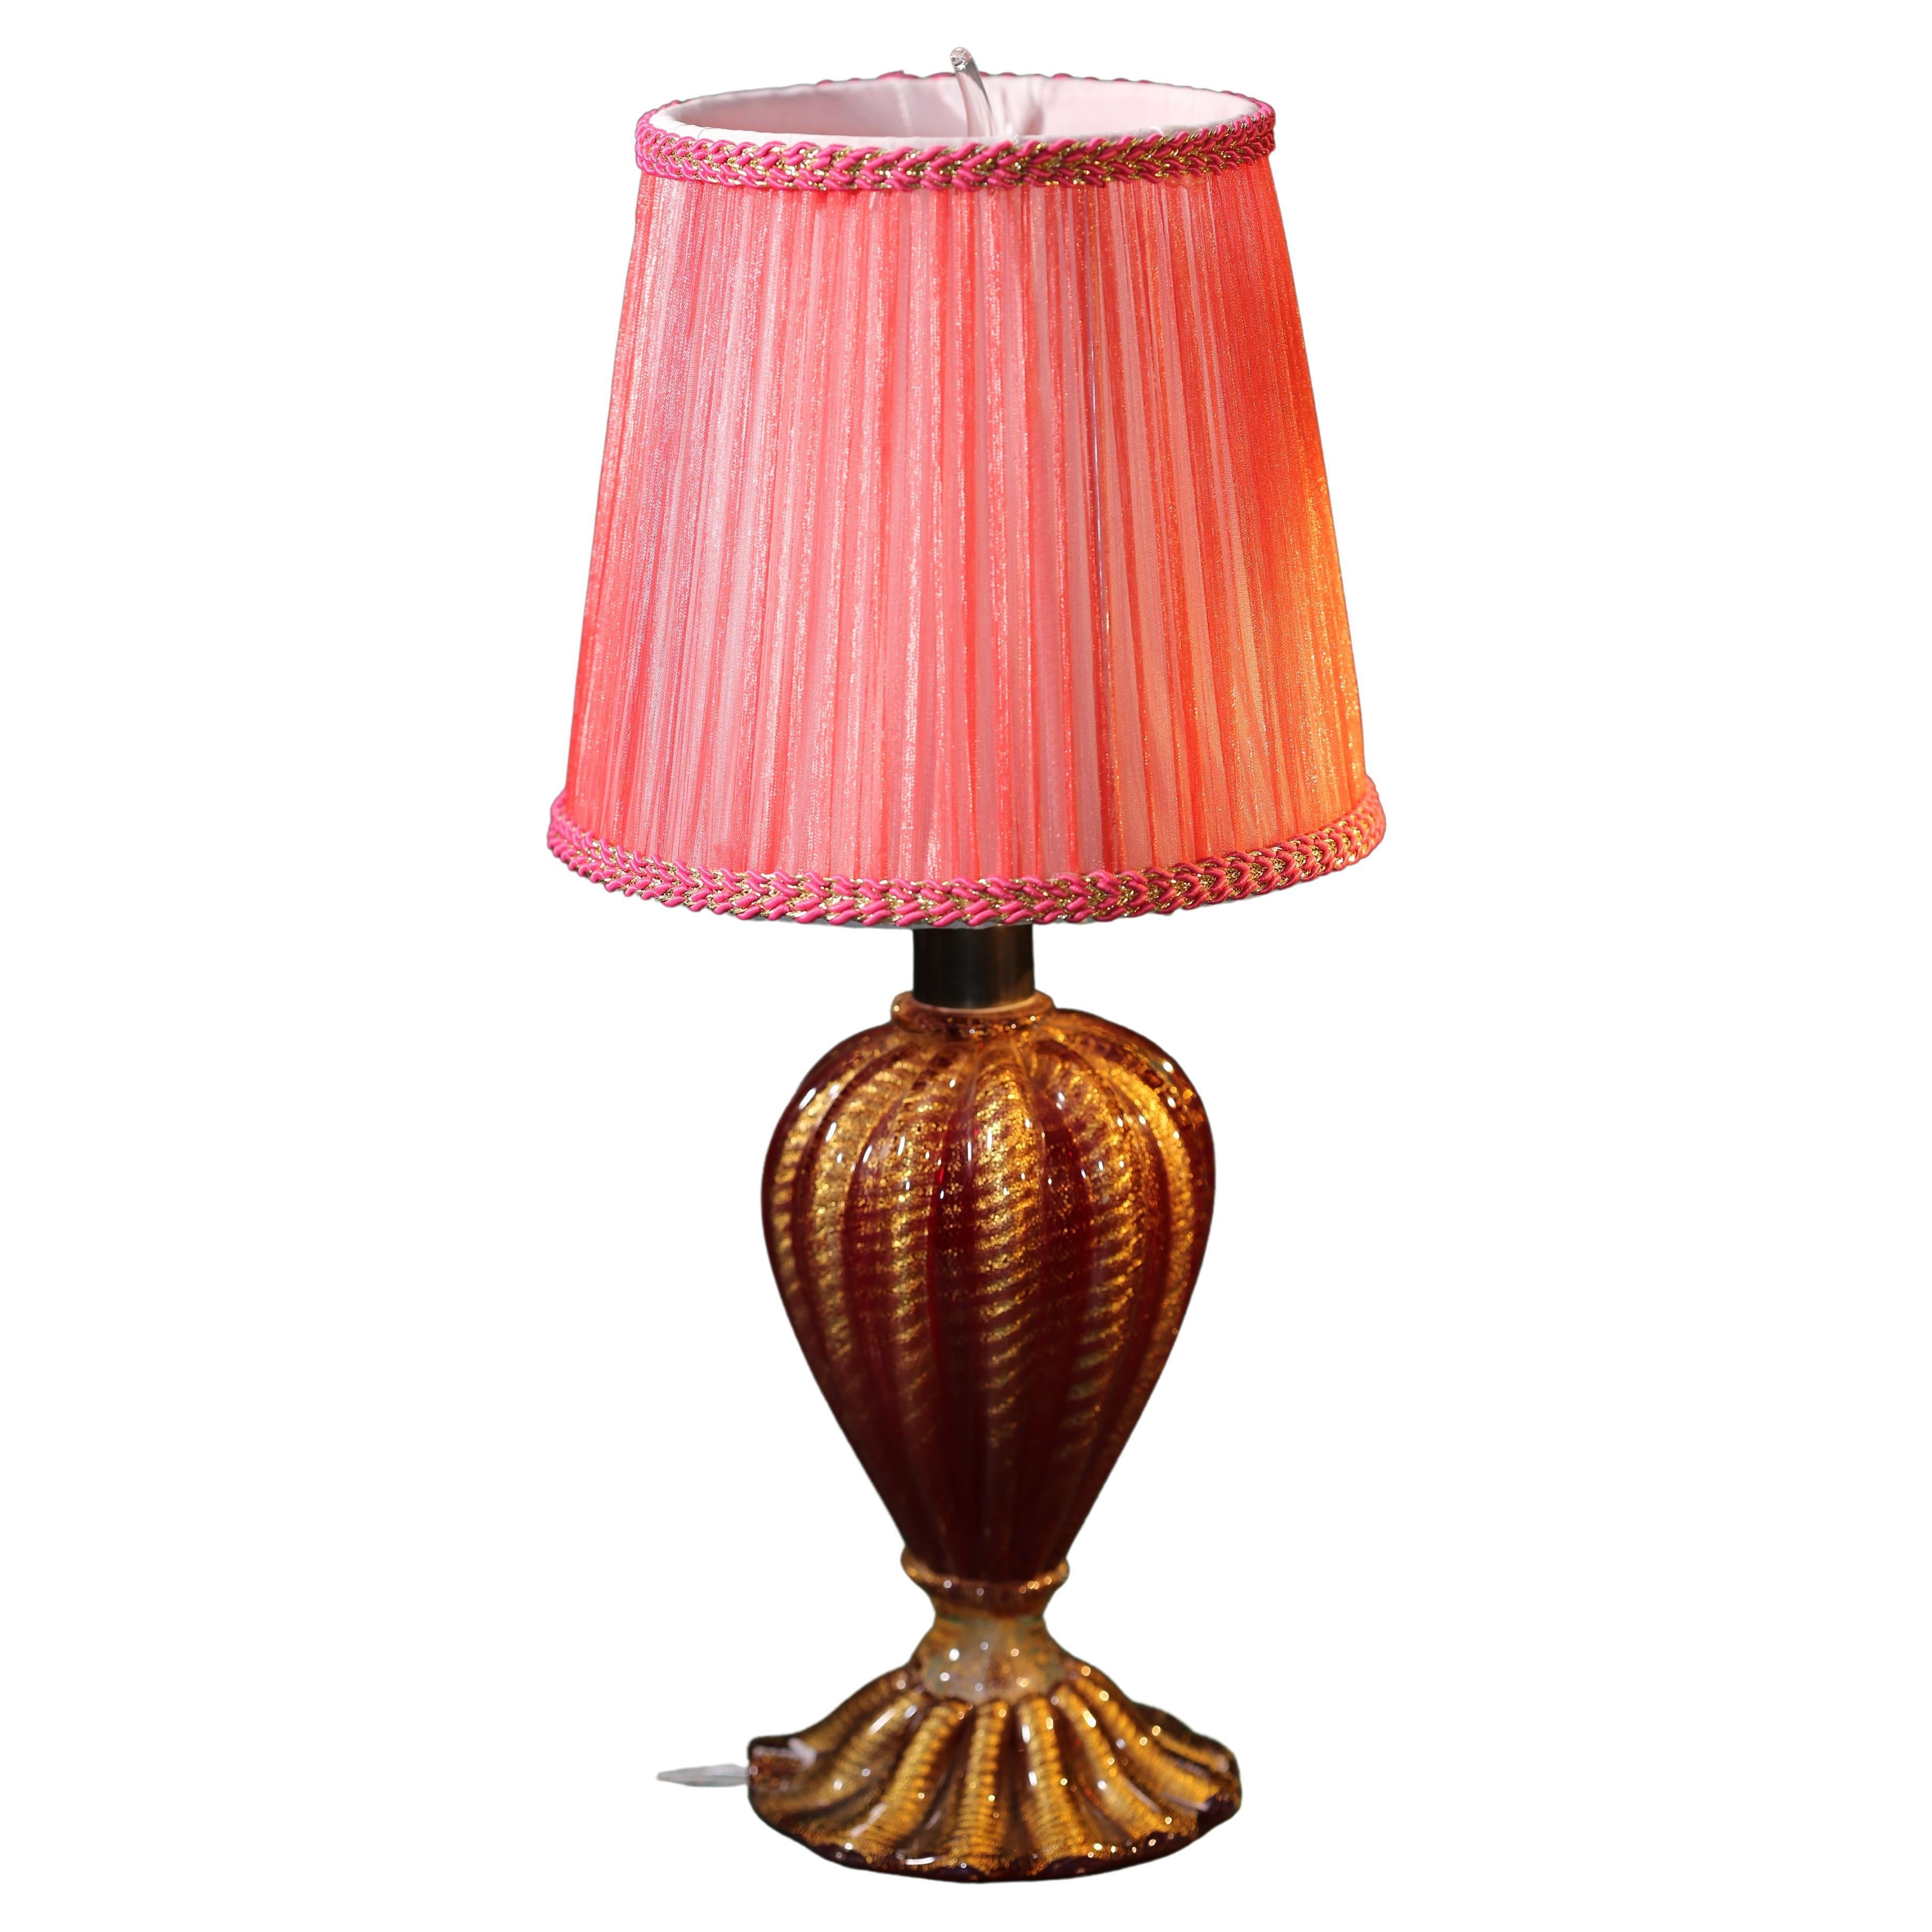 Early 20th Century Italian Murano Glass Art Lamp For Sale